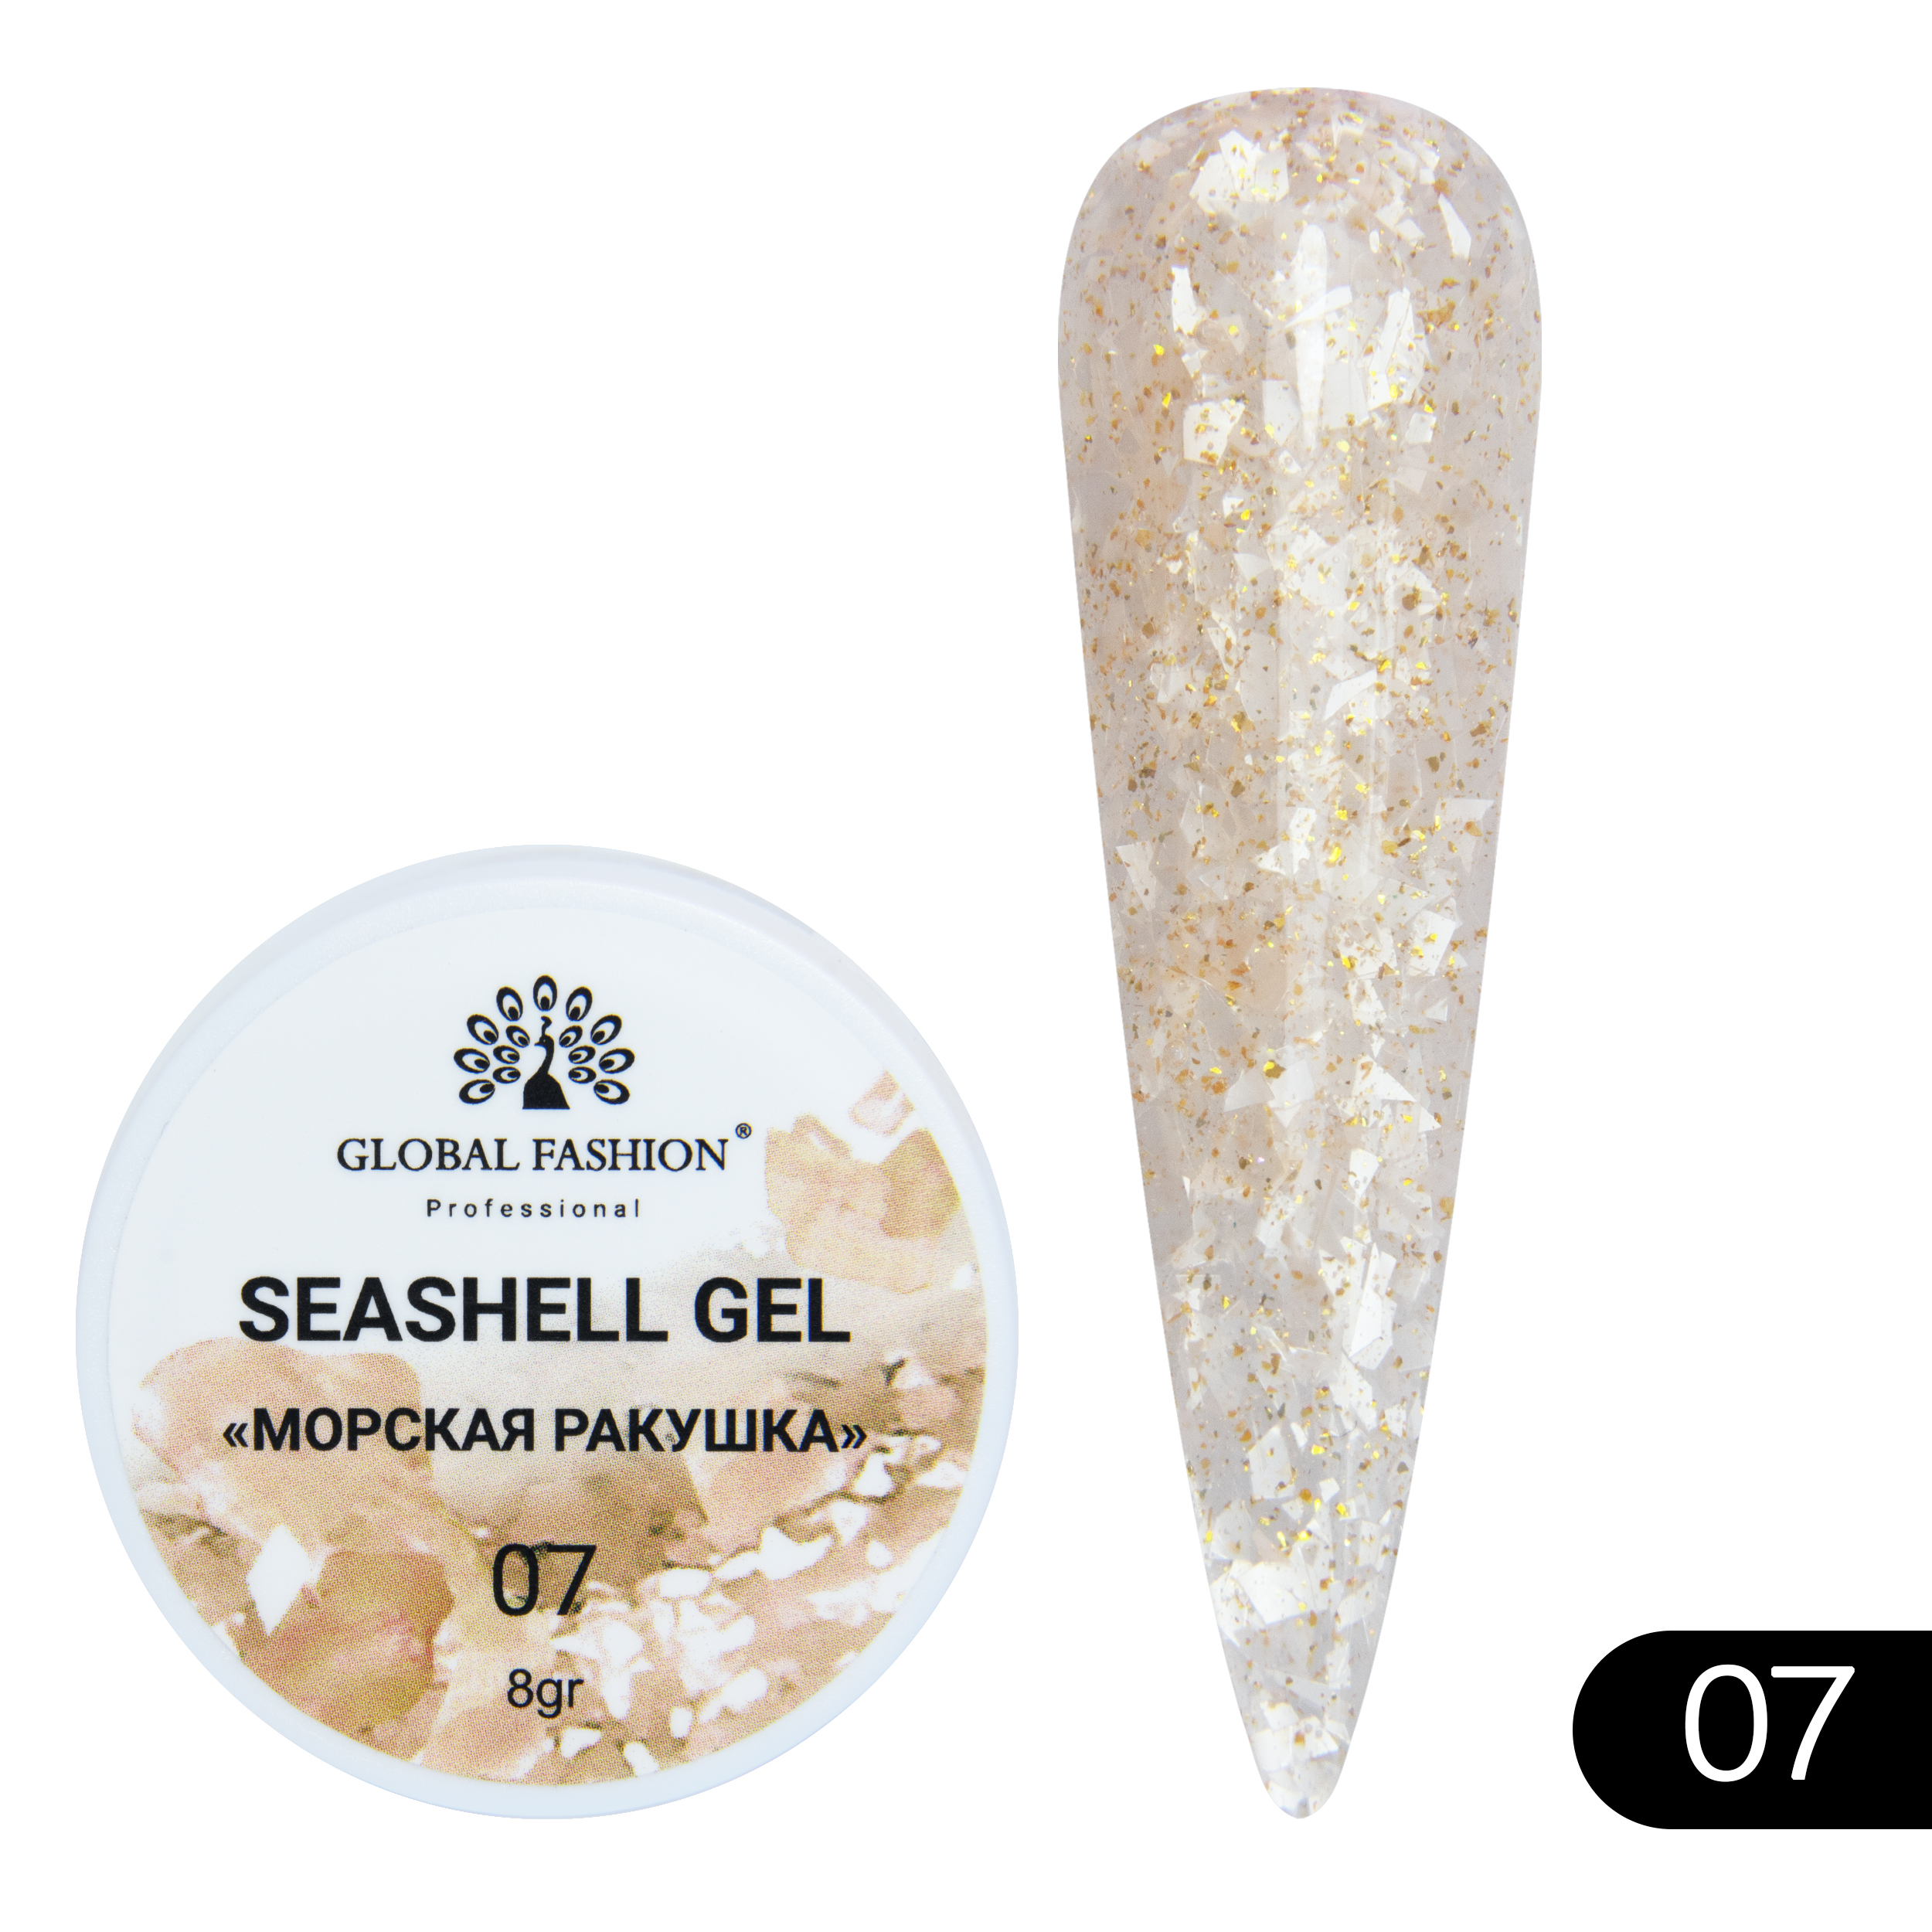 Гель-краска для ногтей Global Fashion с мраморным эффектом ракушки Seashell Gel №07 5 г сачок для аквариумных рыб дарэлл 10 12 см